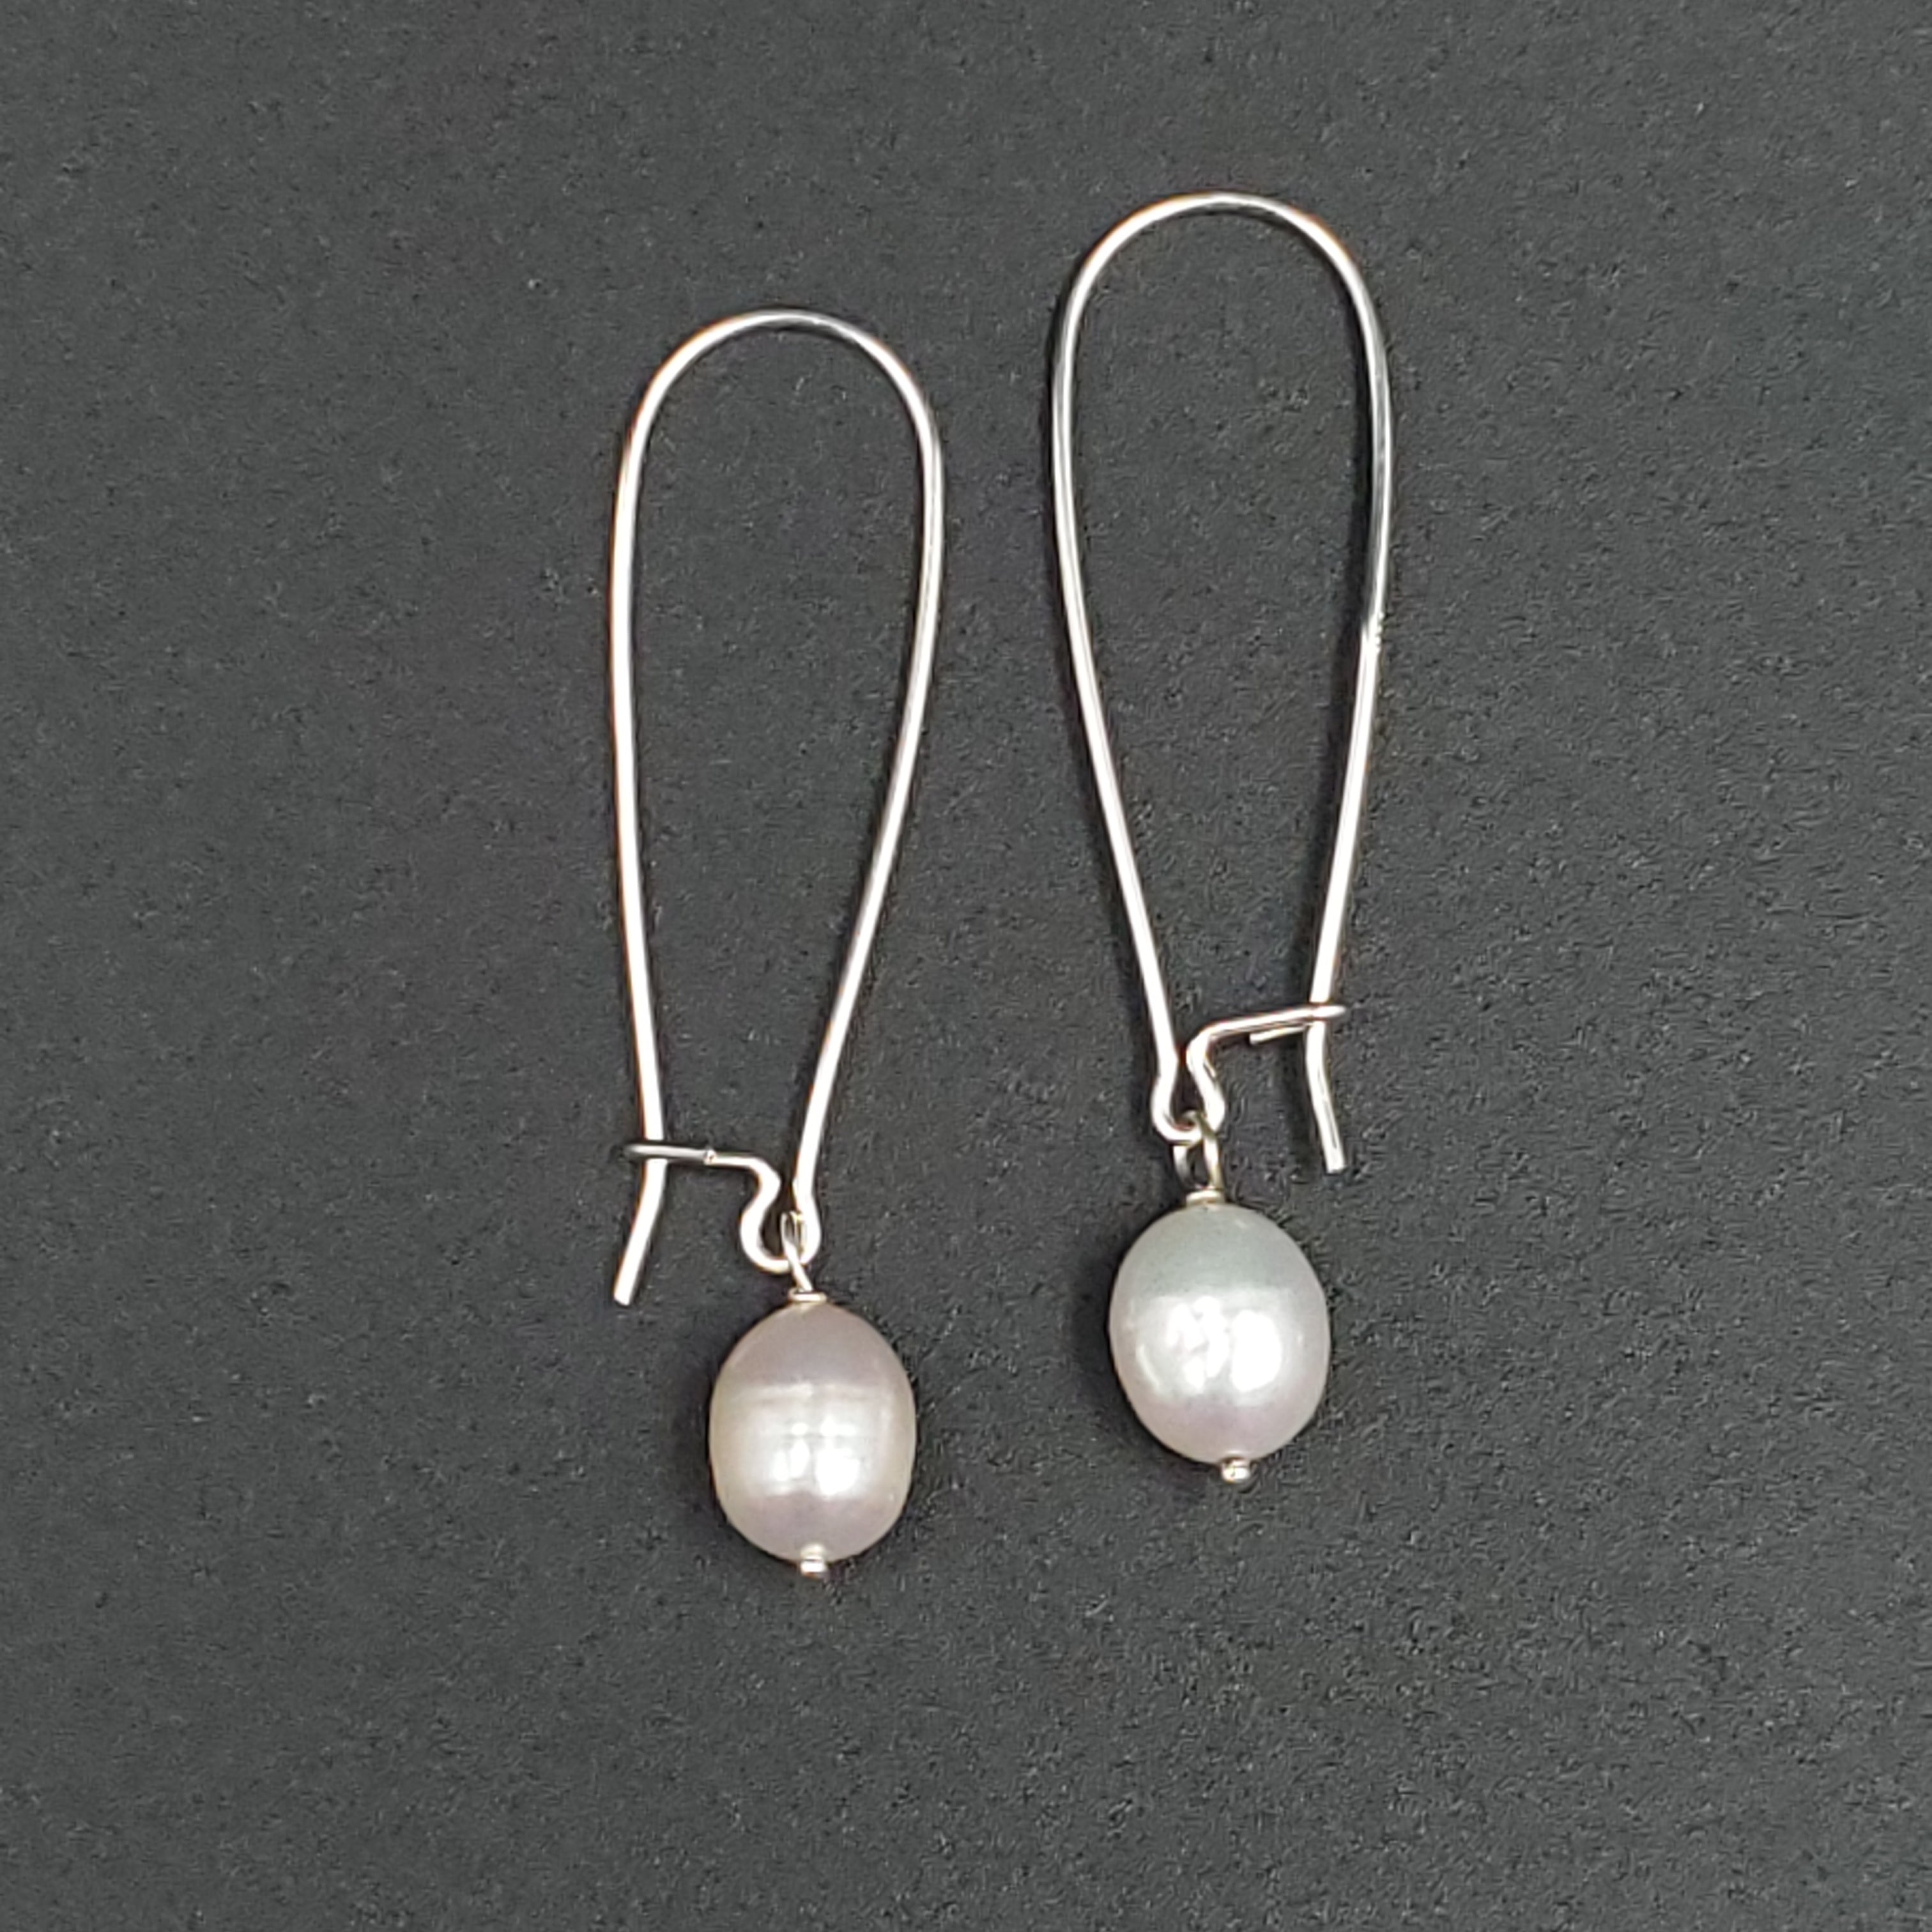 Long silver earrings with fresh water pearls